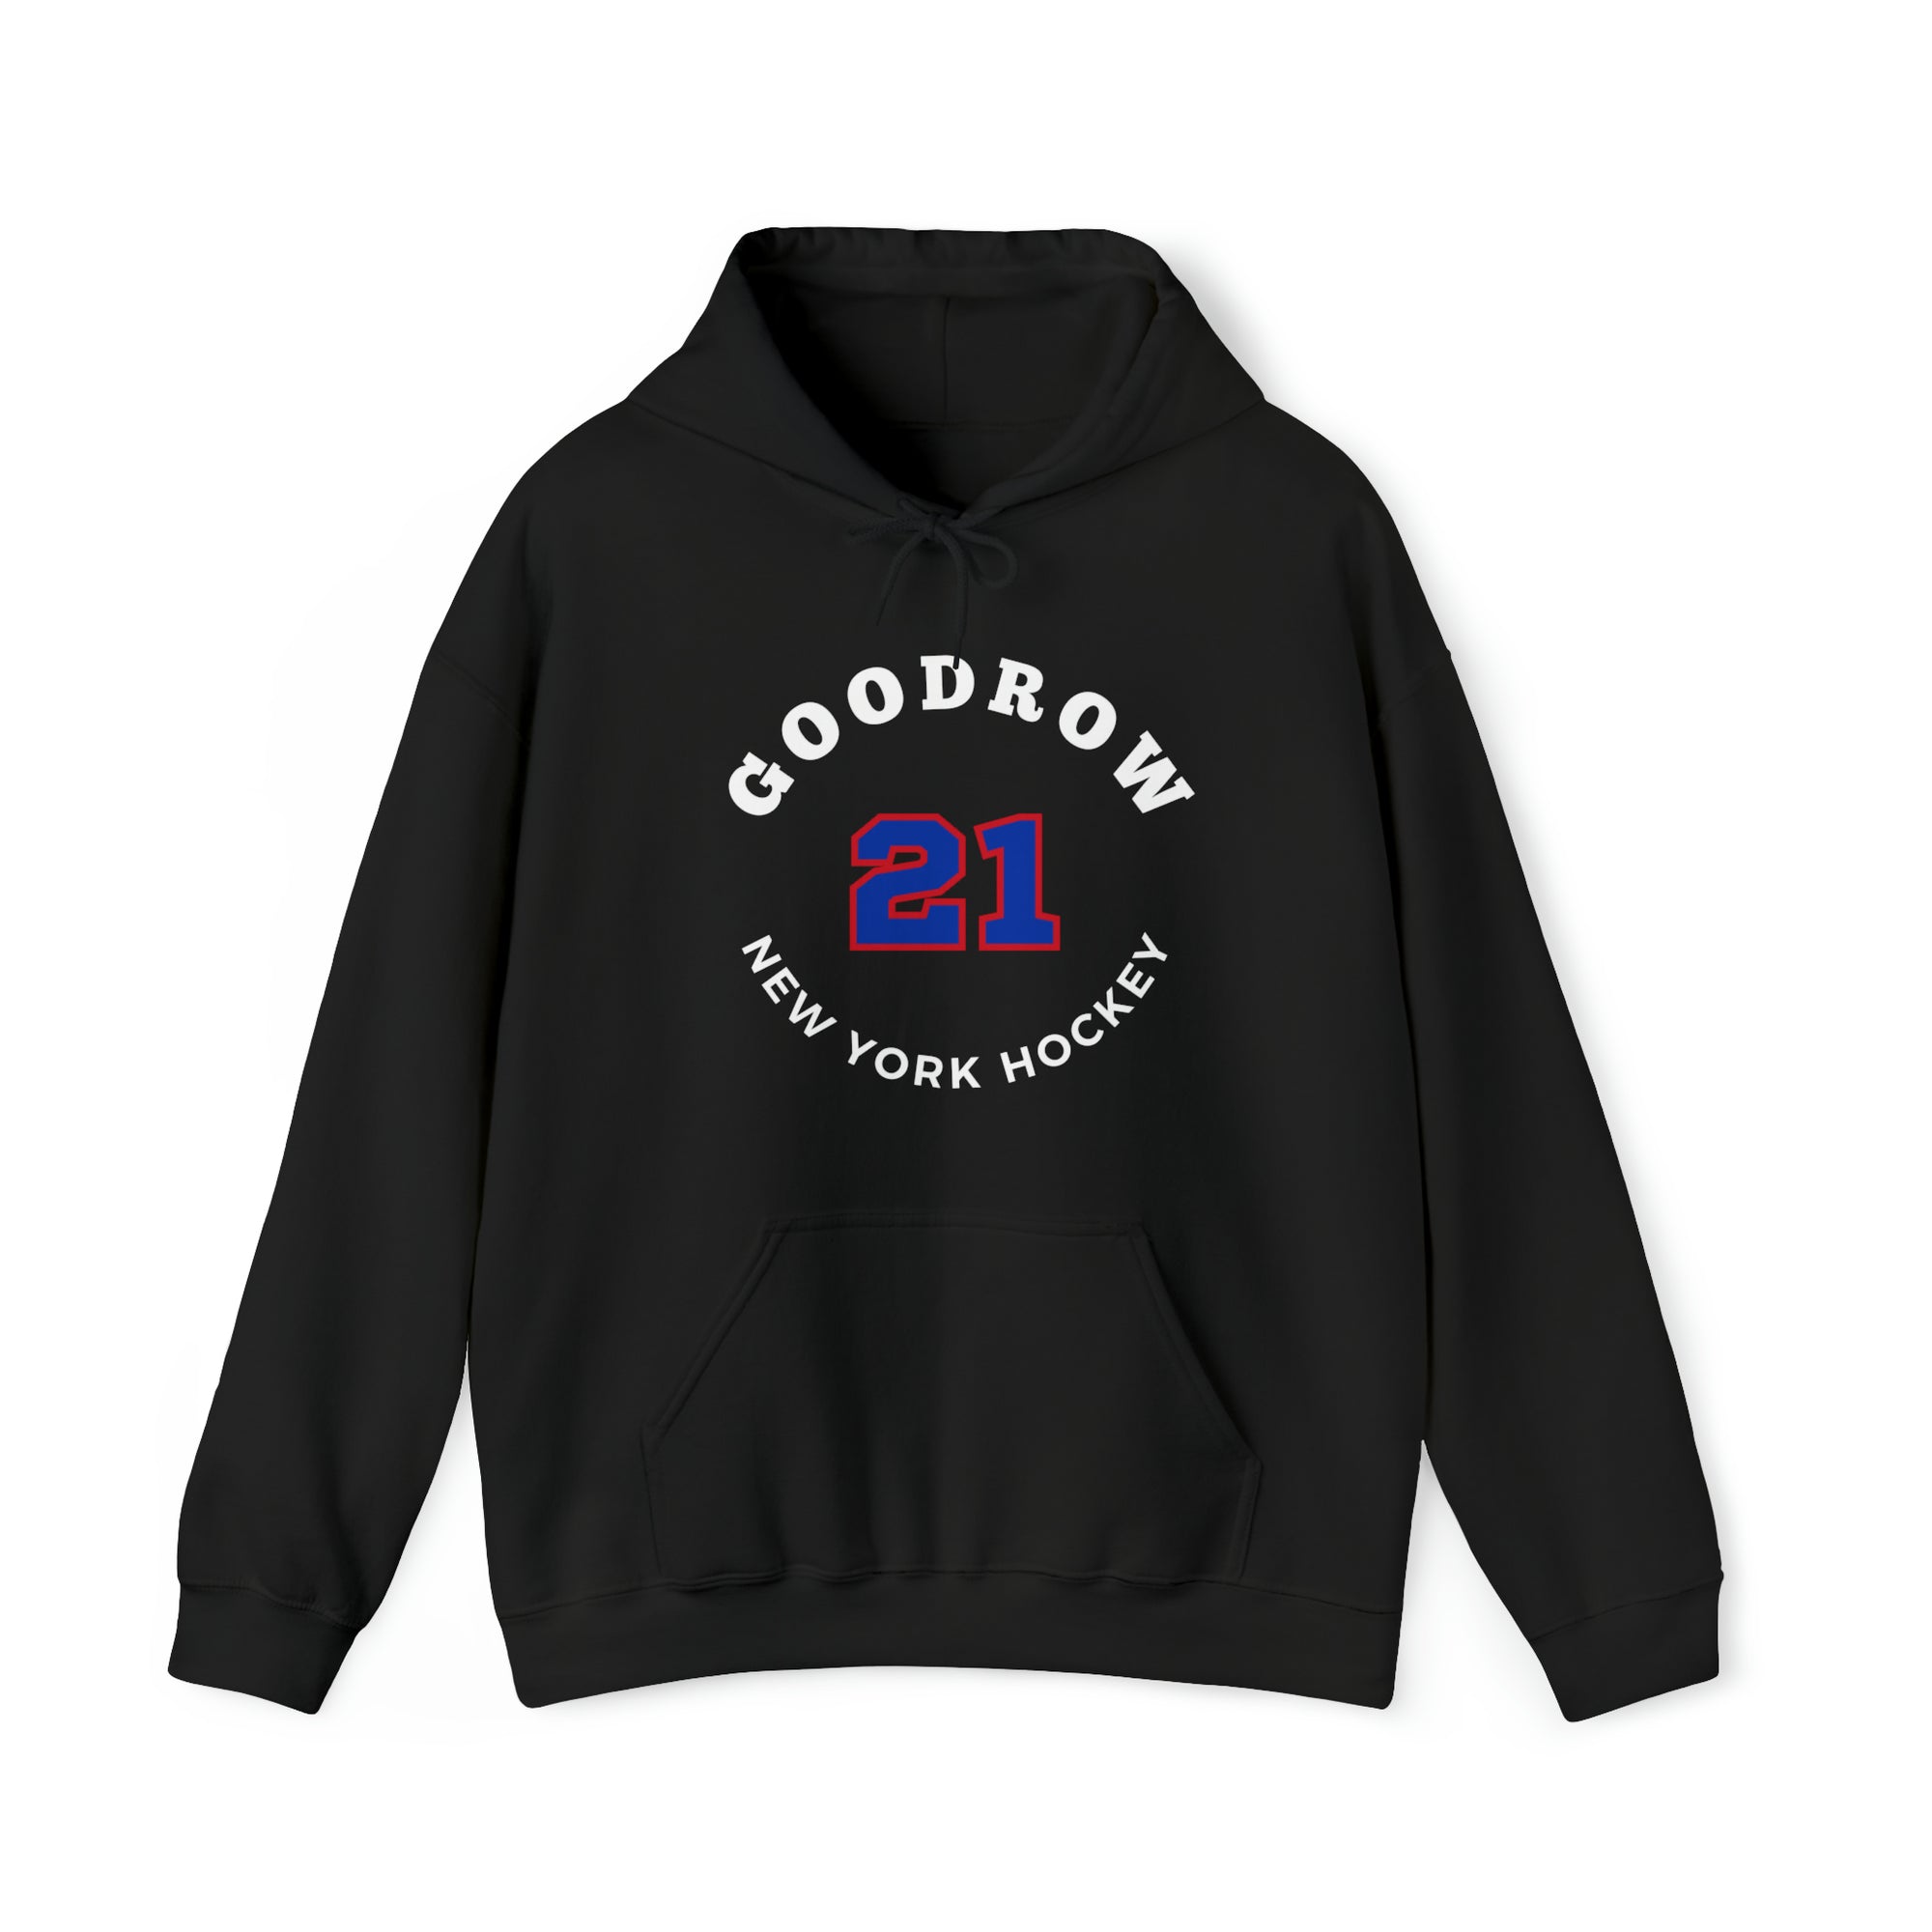 Goodrow 21 New York Hockey Number Arch Design Unisex Hooded Sweatshirt